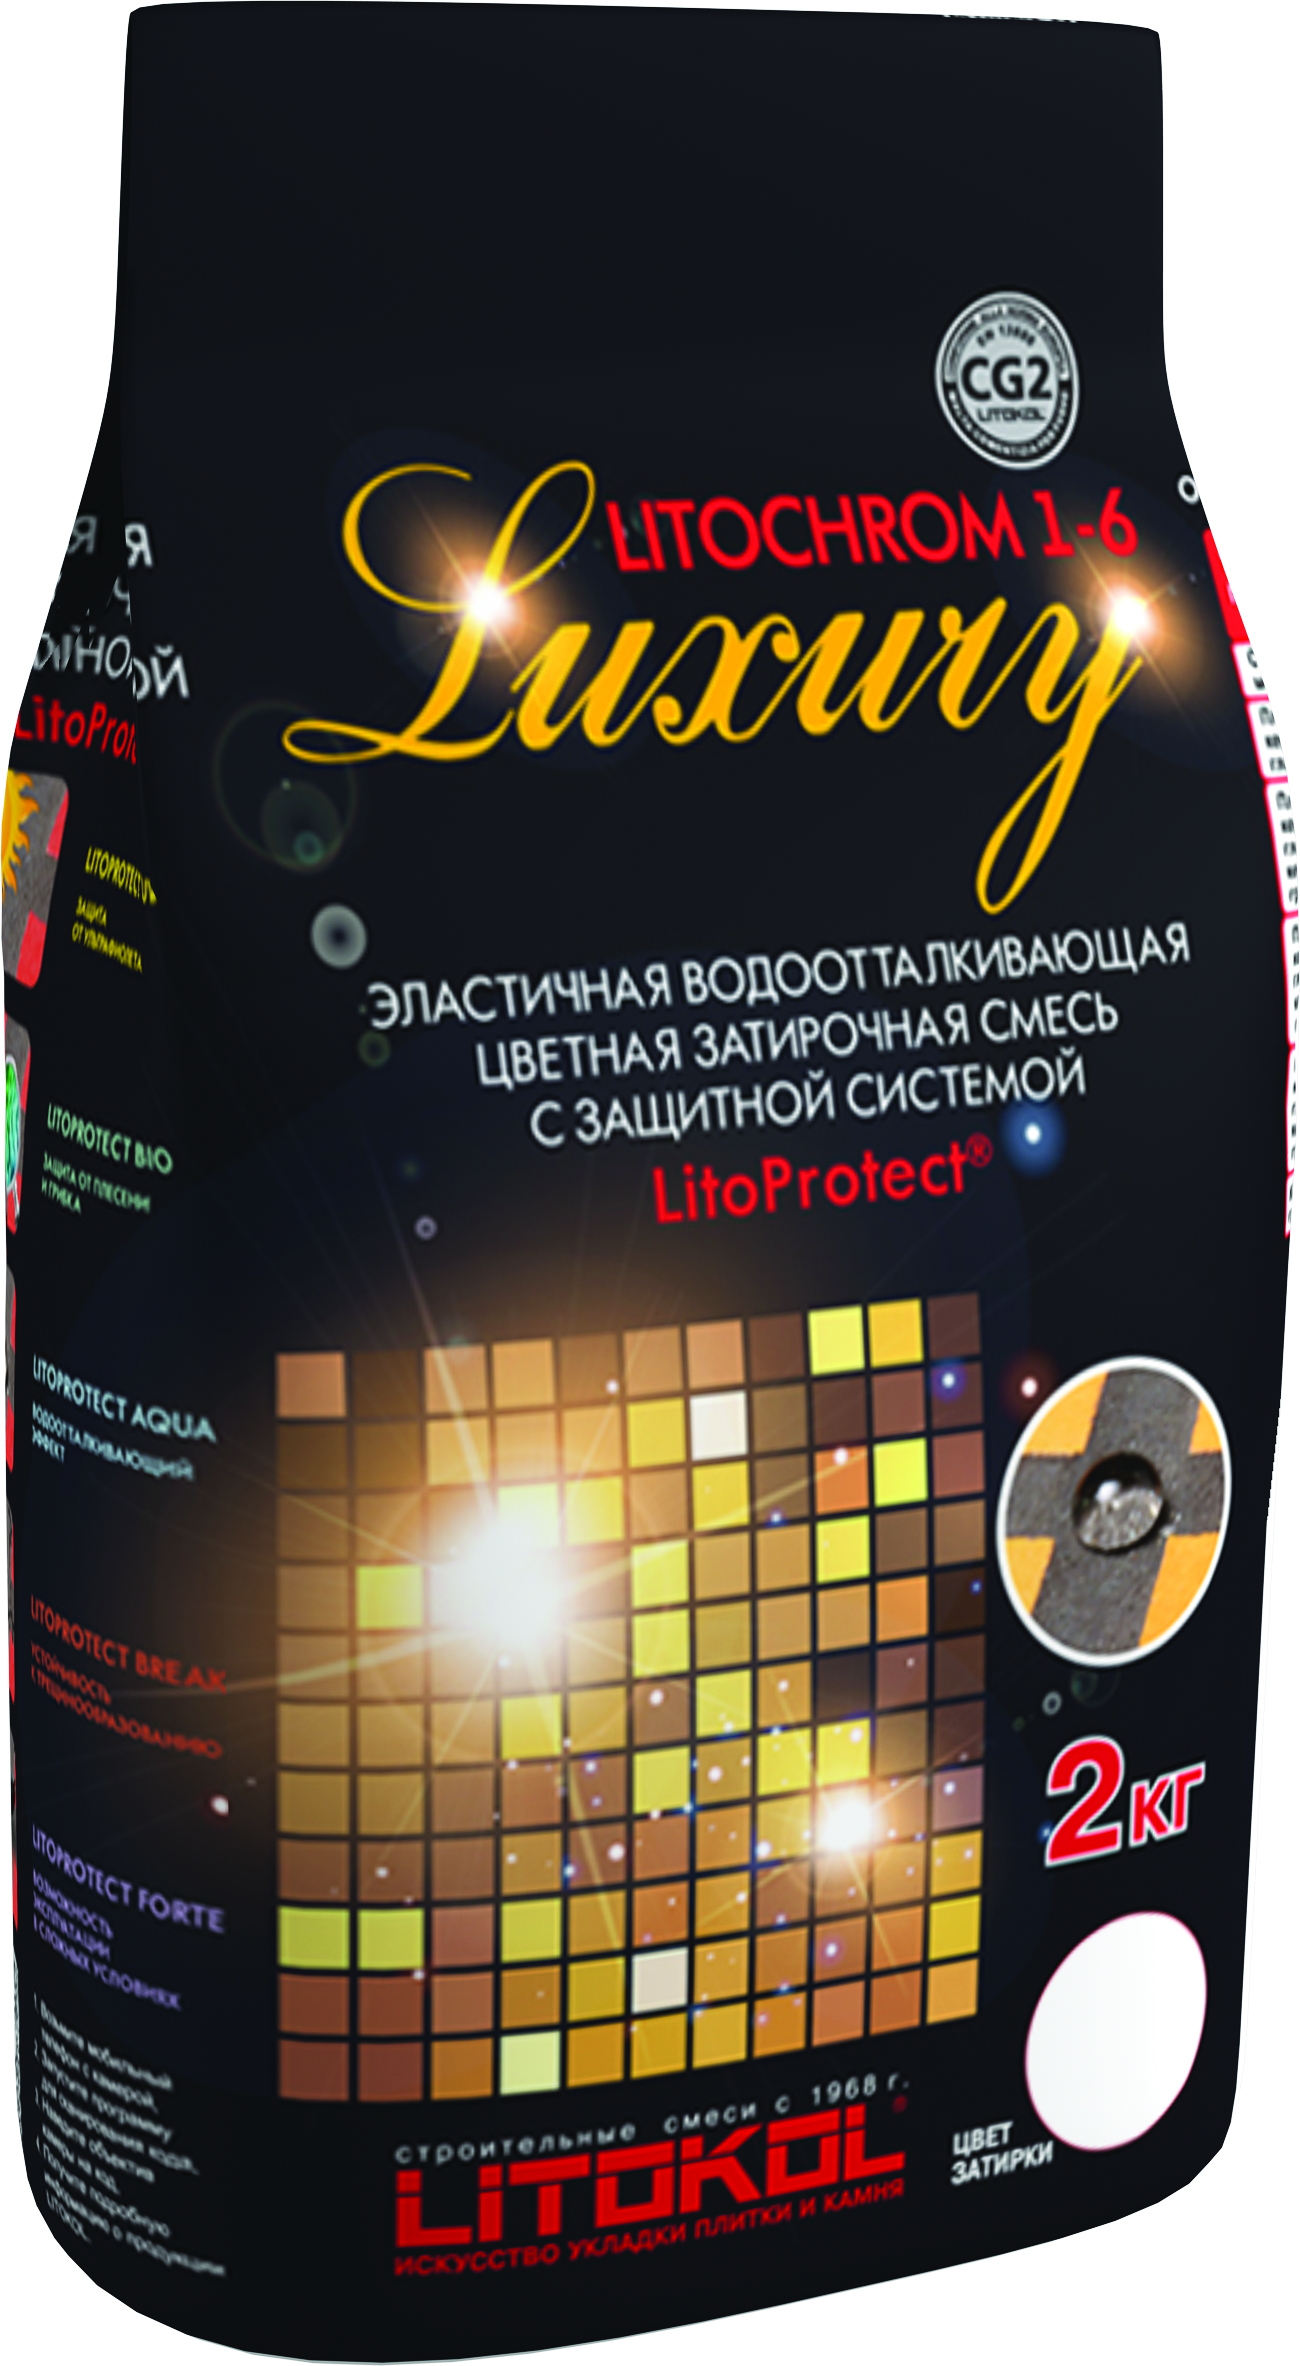 Купить Litokol Litochrom 1-6 Luxury C.510, 2 кг